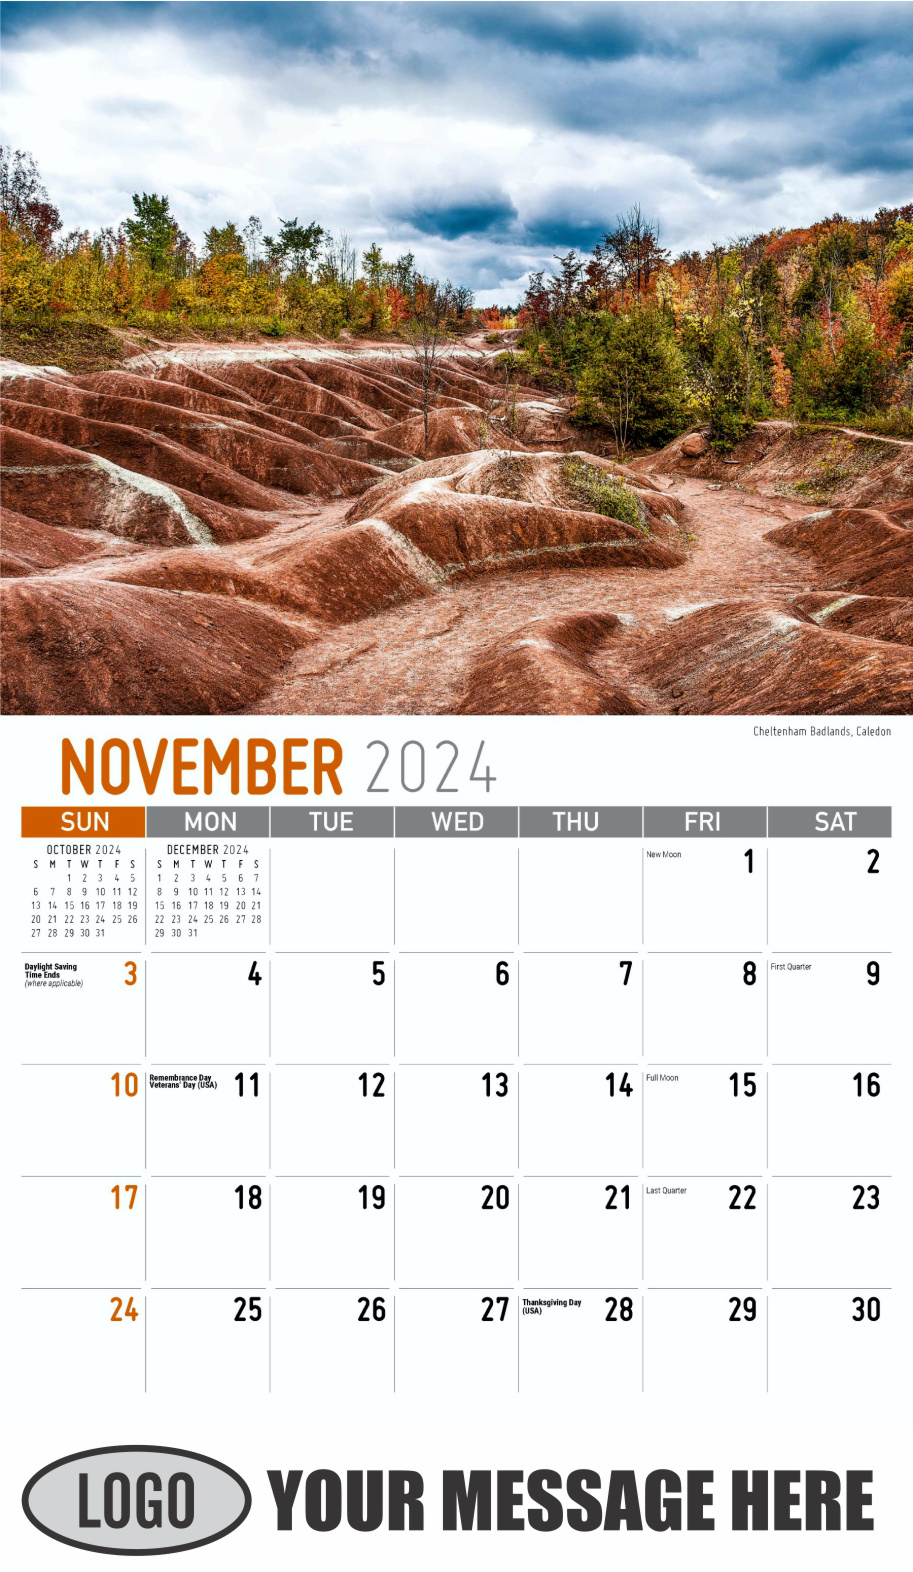 Scenes of Ontario 2024 Business Promo Wall Calendar - November